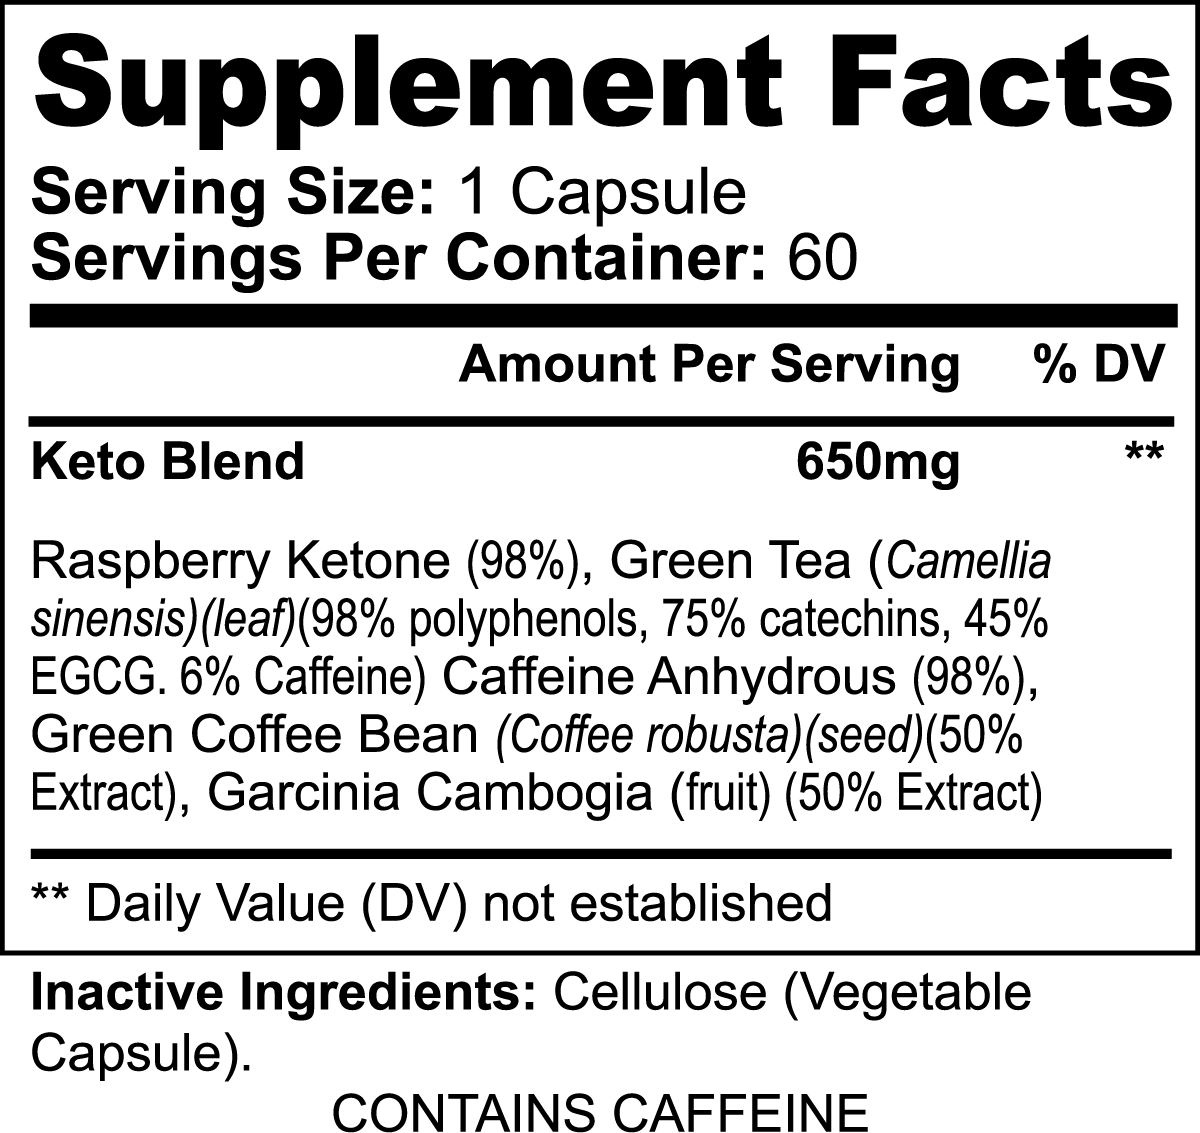 Keto-5 - Ketogenic Supplement | Kasivit.com